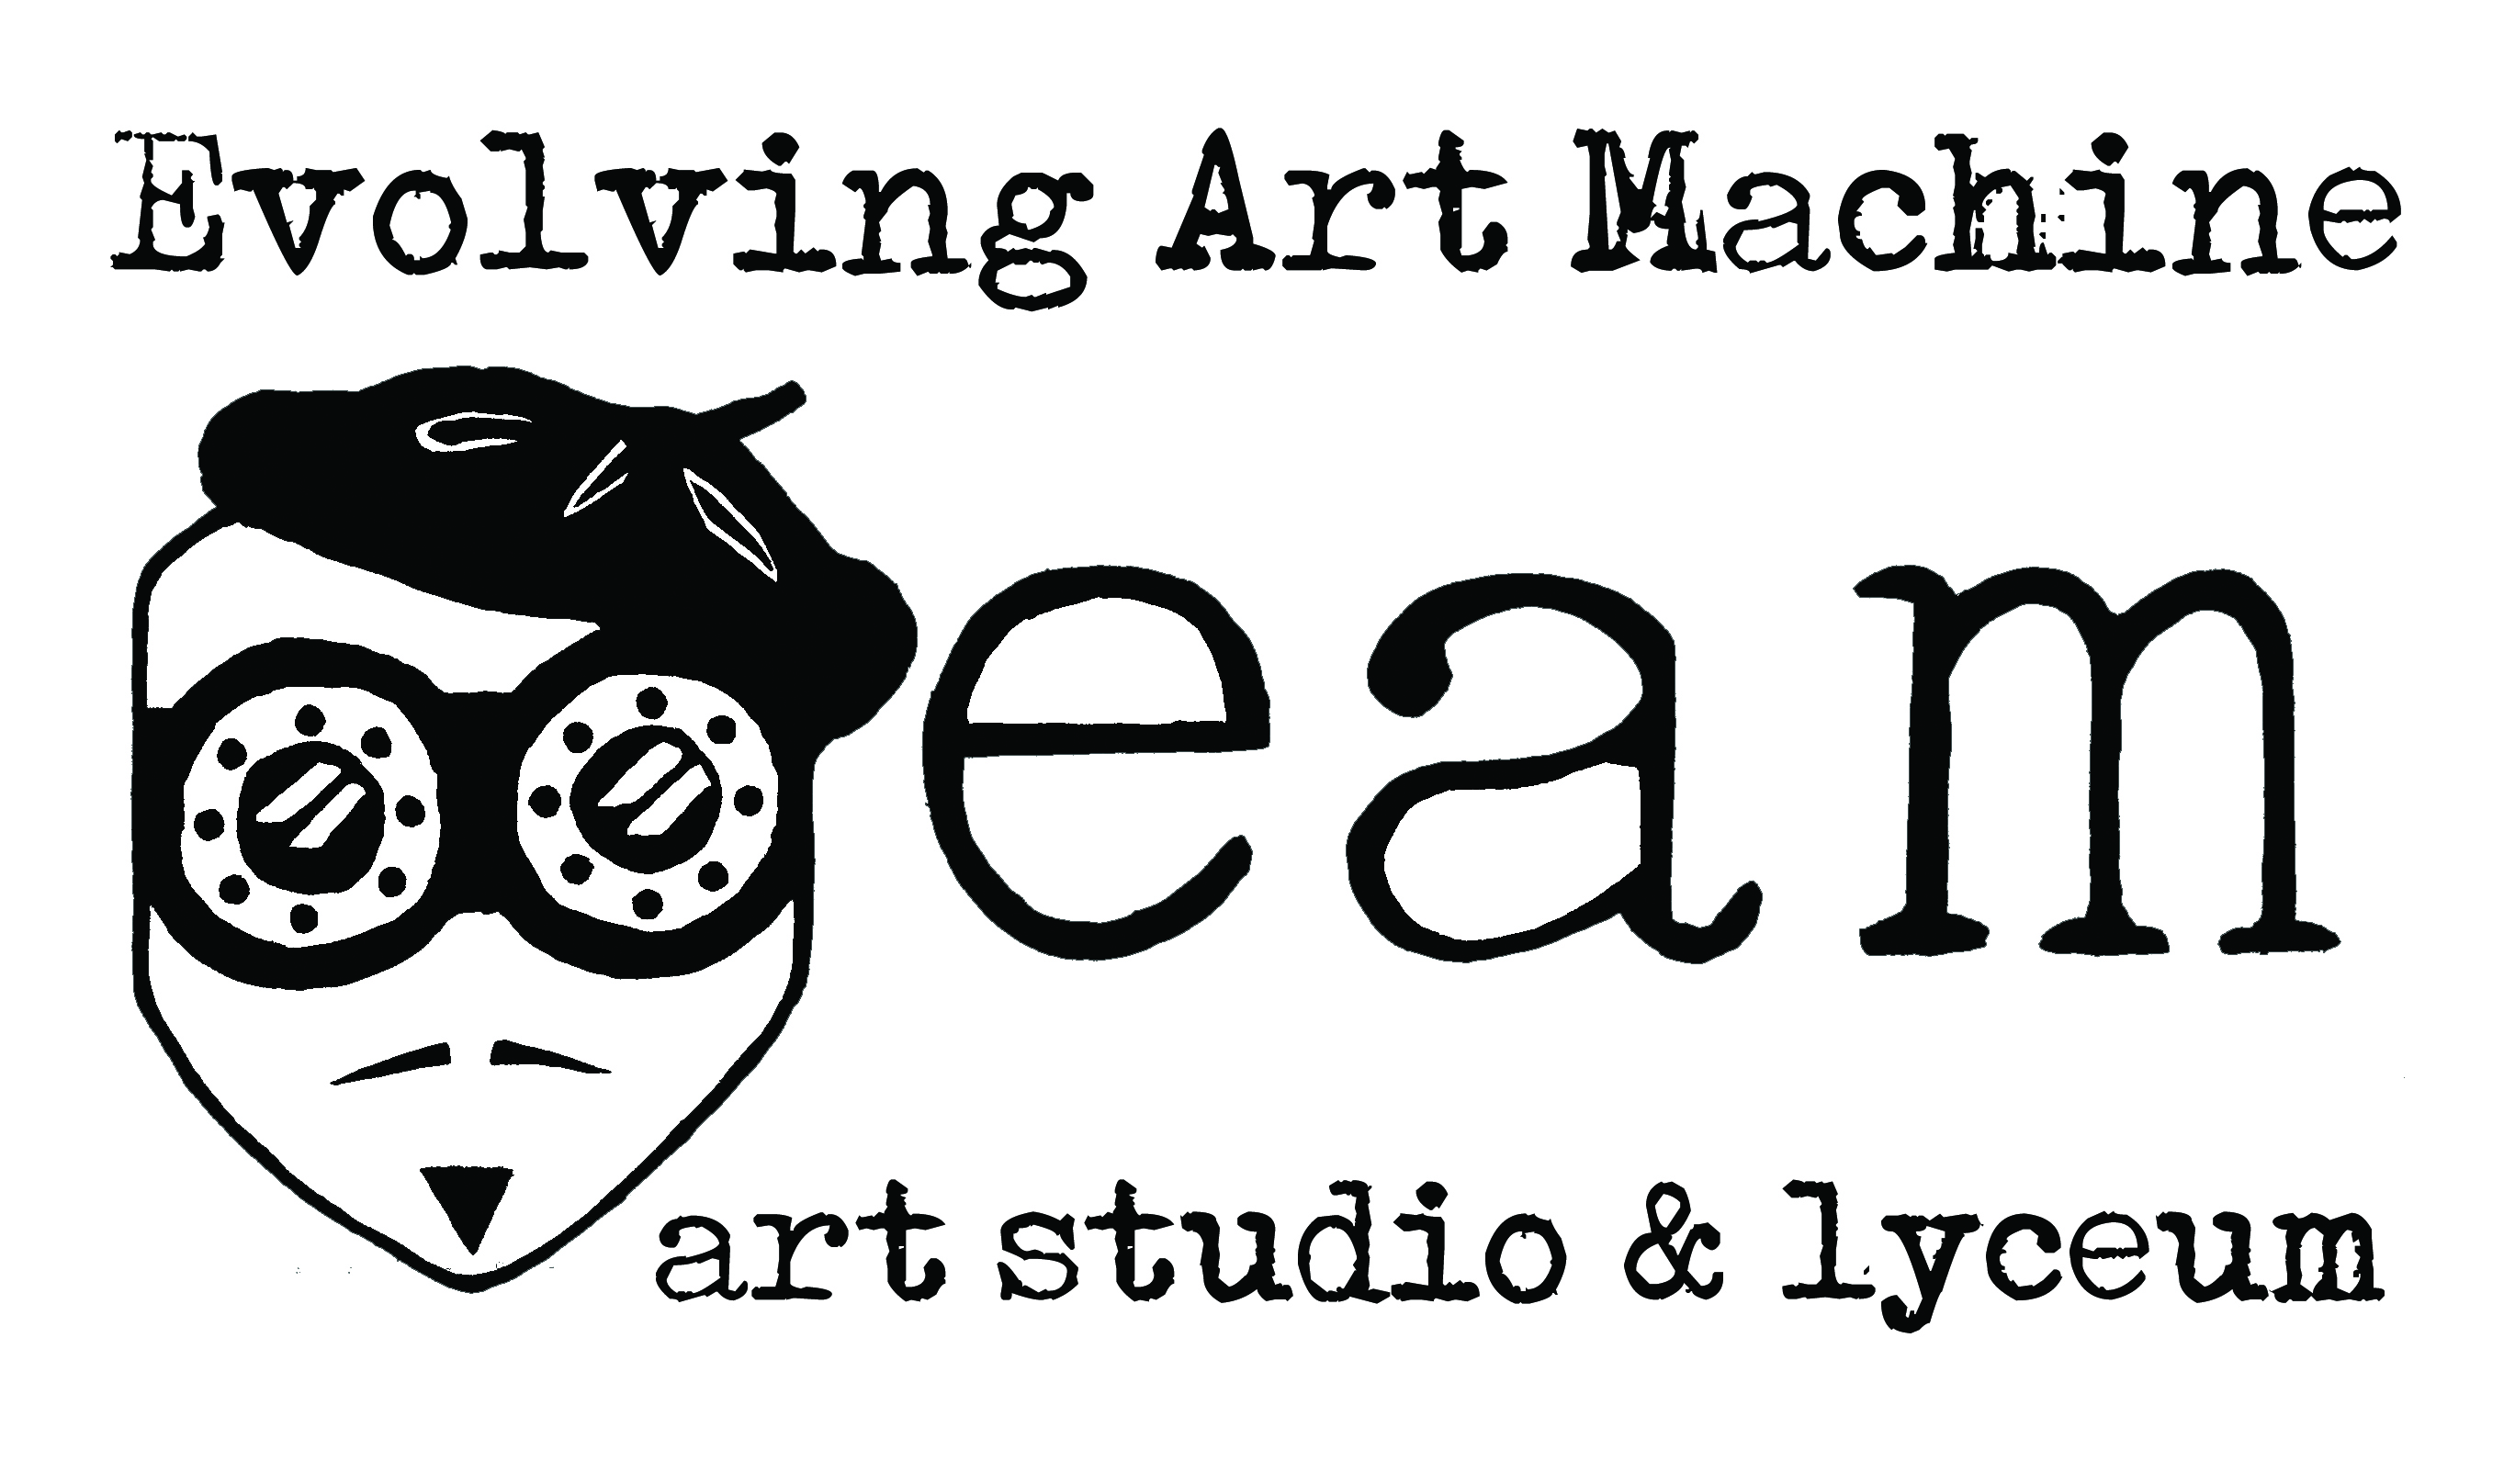 Evolving Art Machine art studio & lyceum